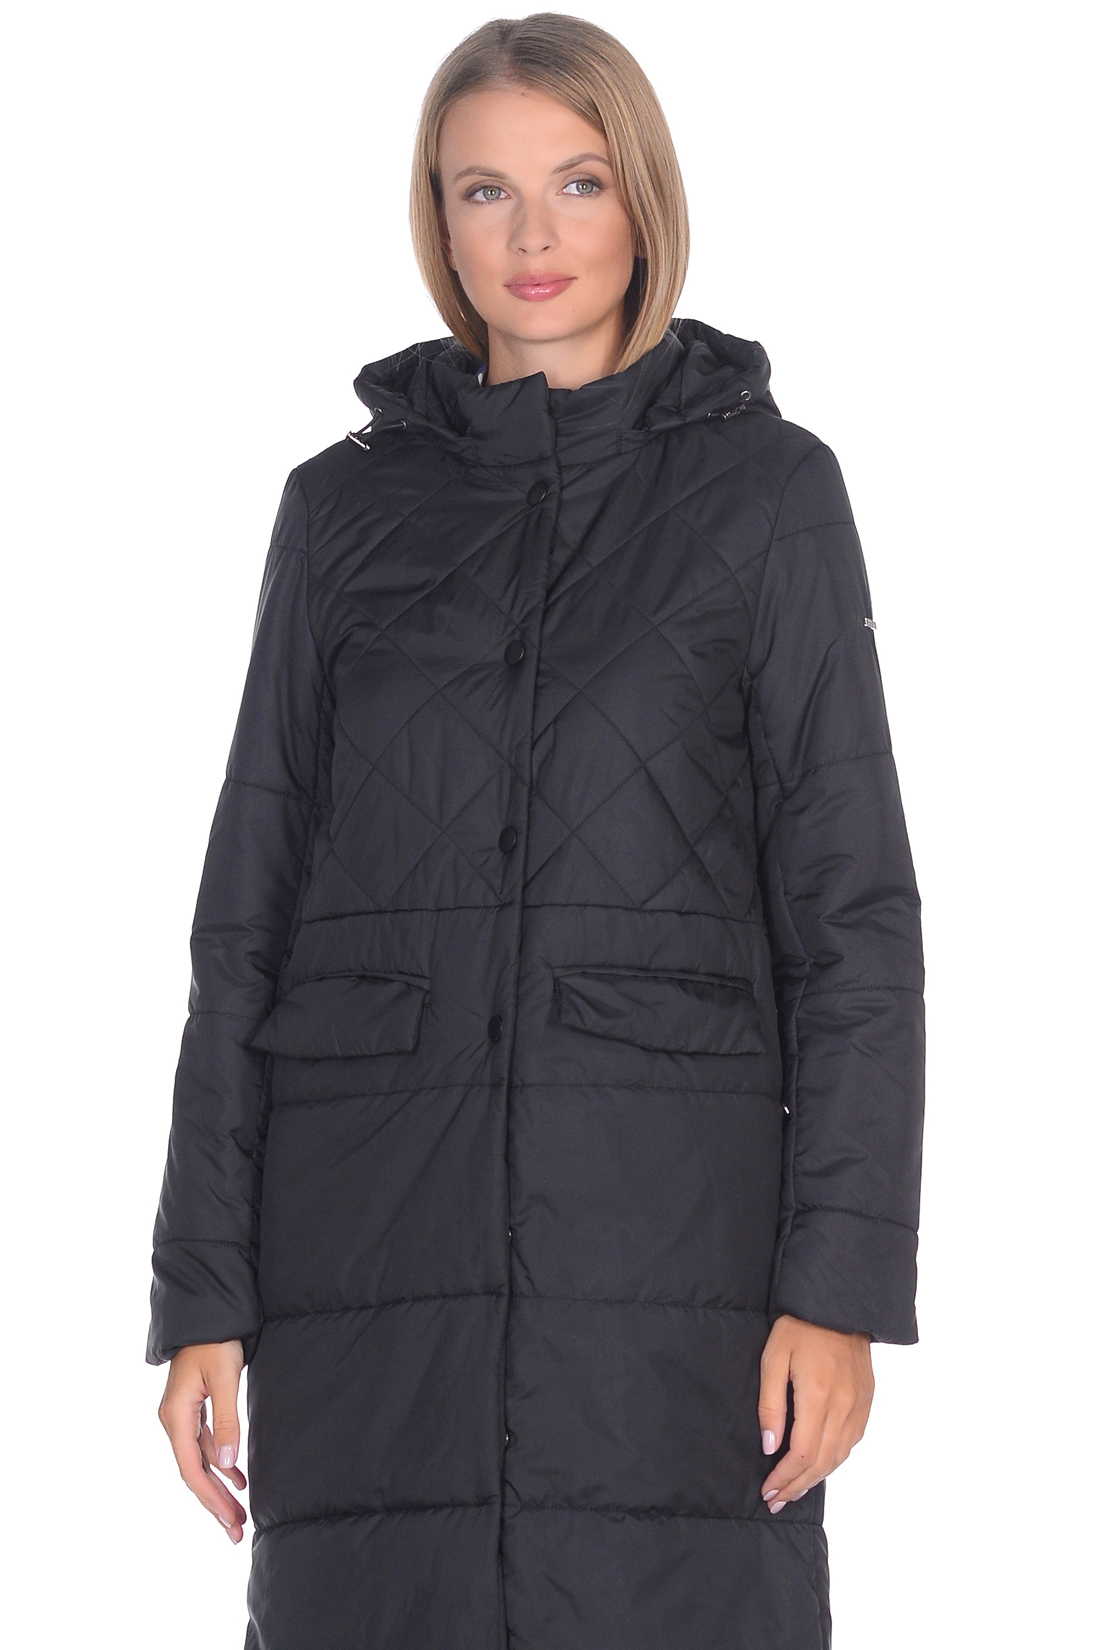 Удлинённая прямая куртка (арт. baon B039033), размер 3XL, цвет черный Удлинённая прямая куртка (арт. baon B039033) - фото 5